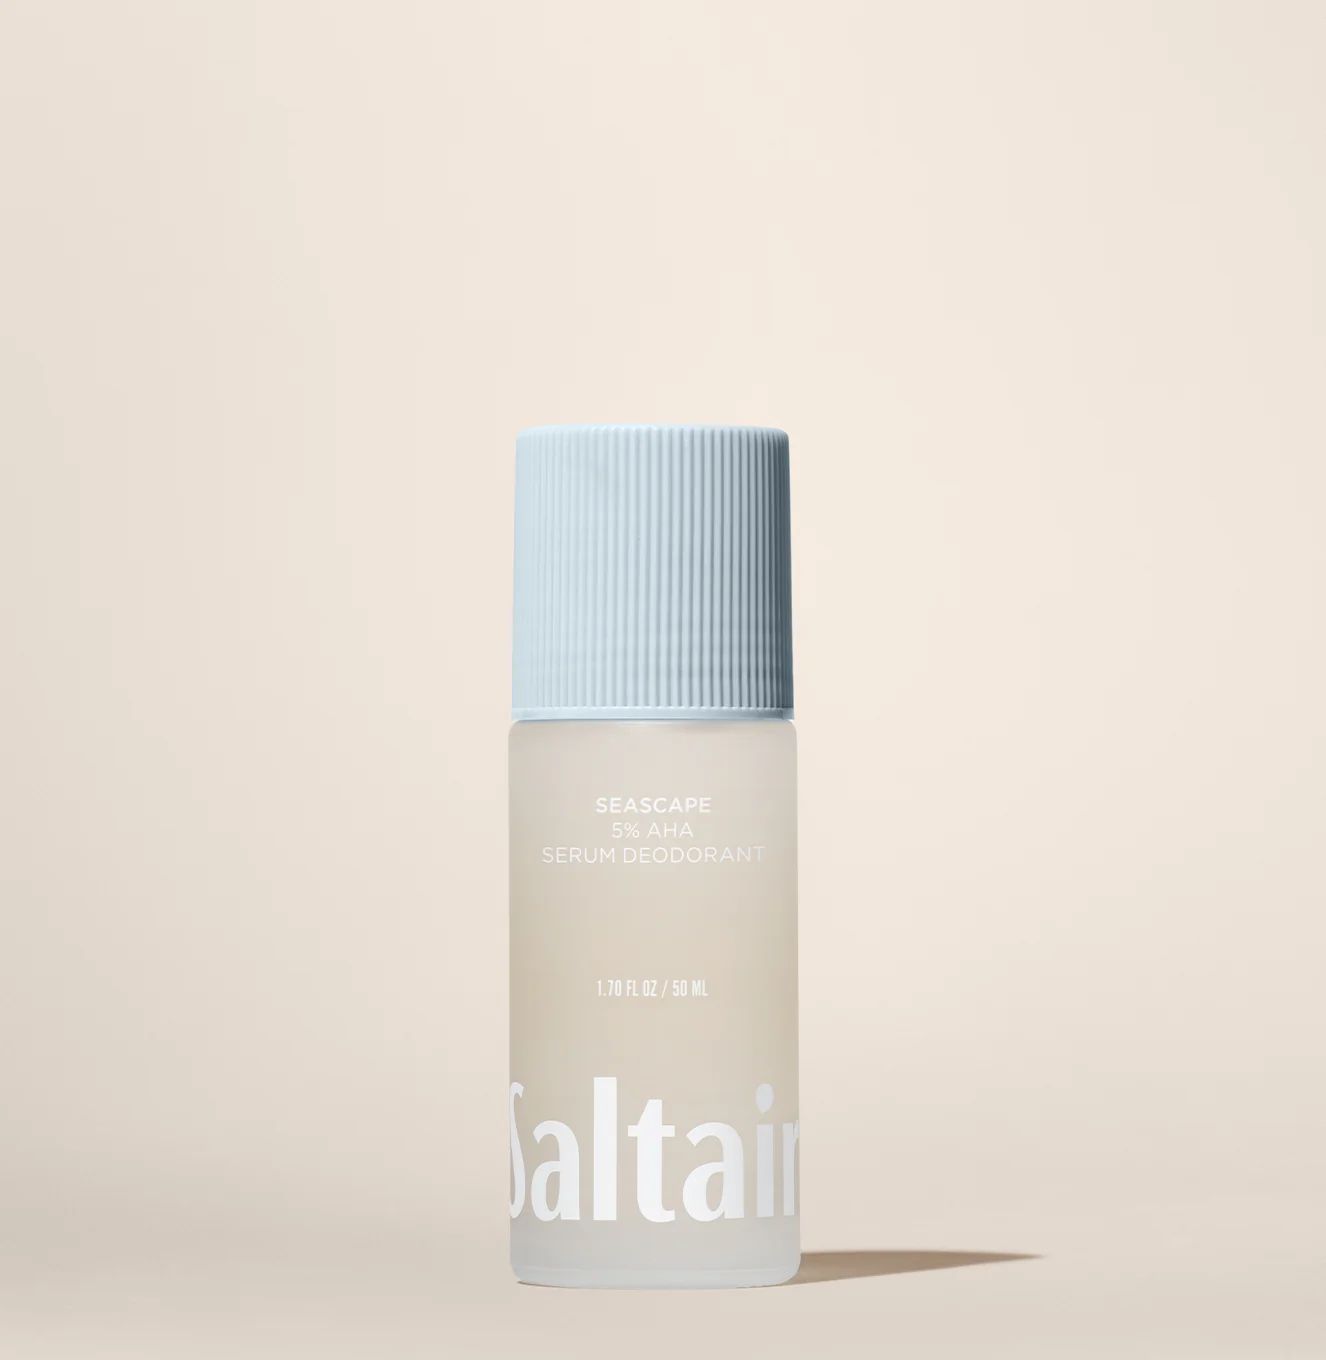 Serum Deodorant With 5% AHA - Seascape | Saltair | Saltair